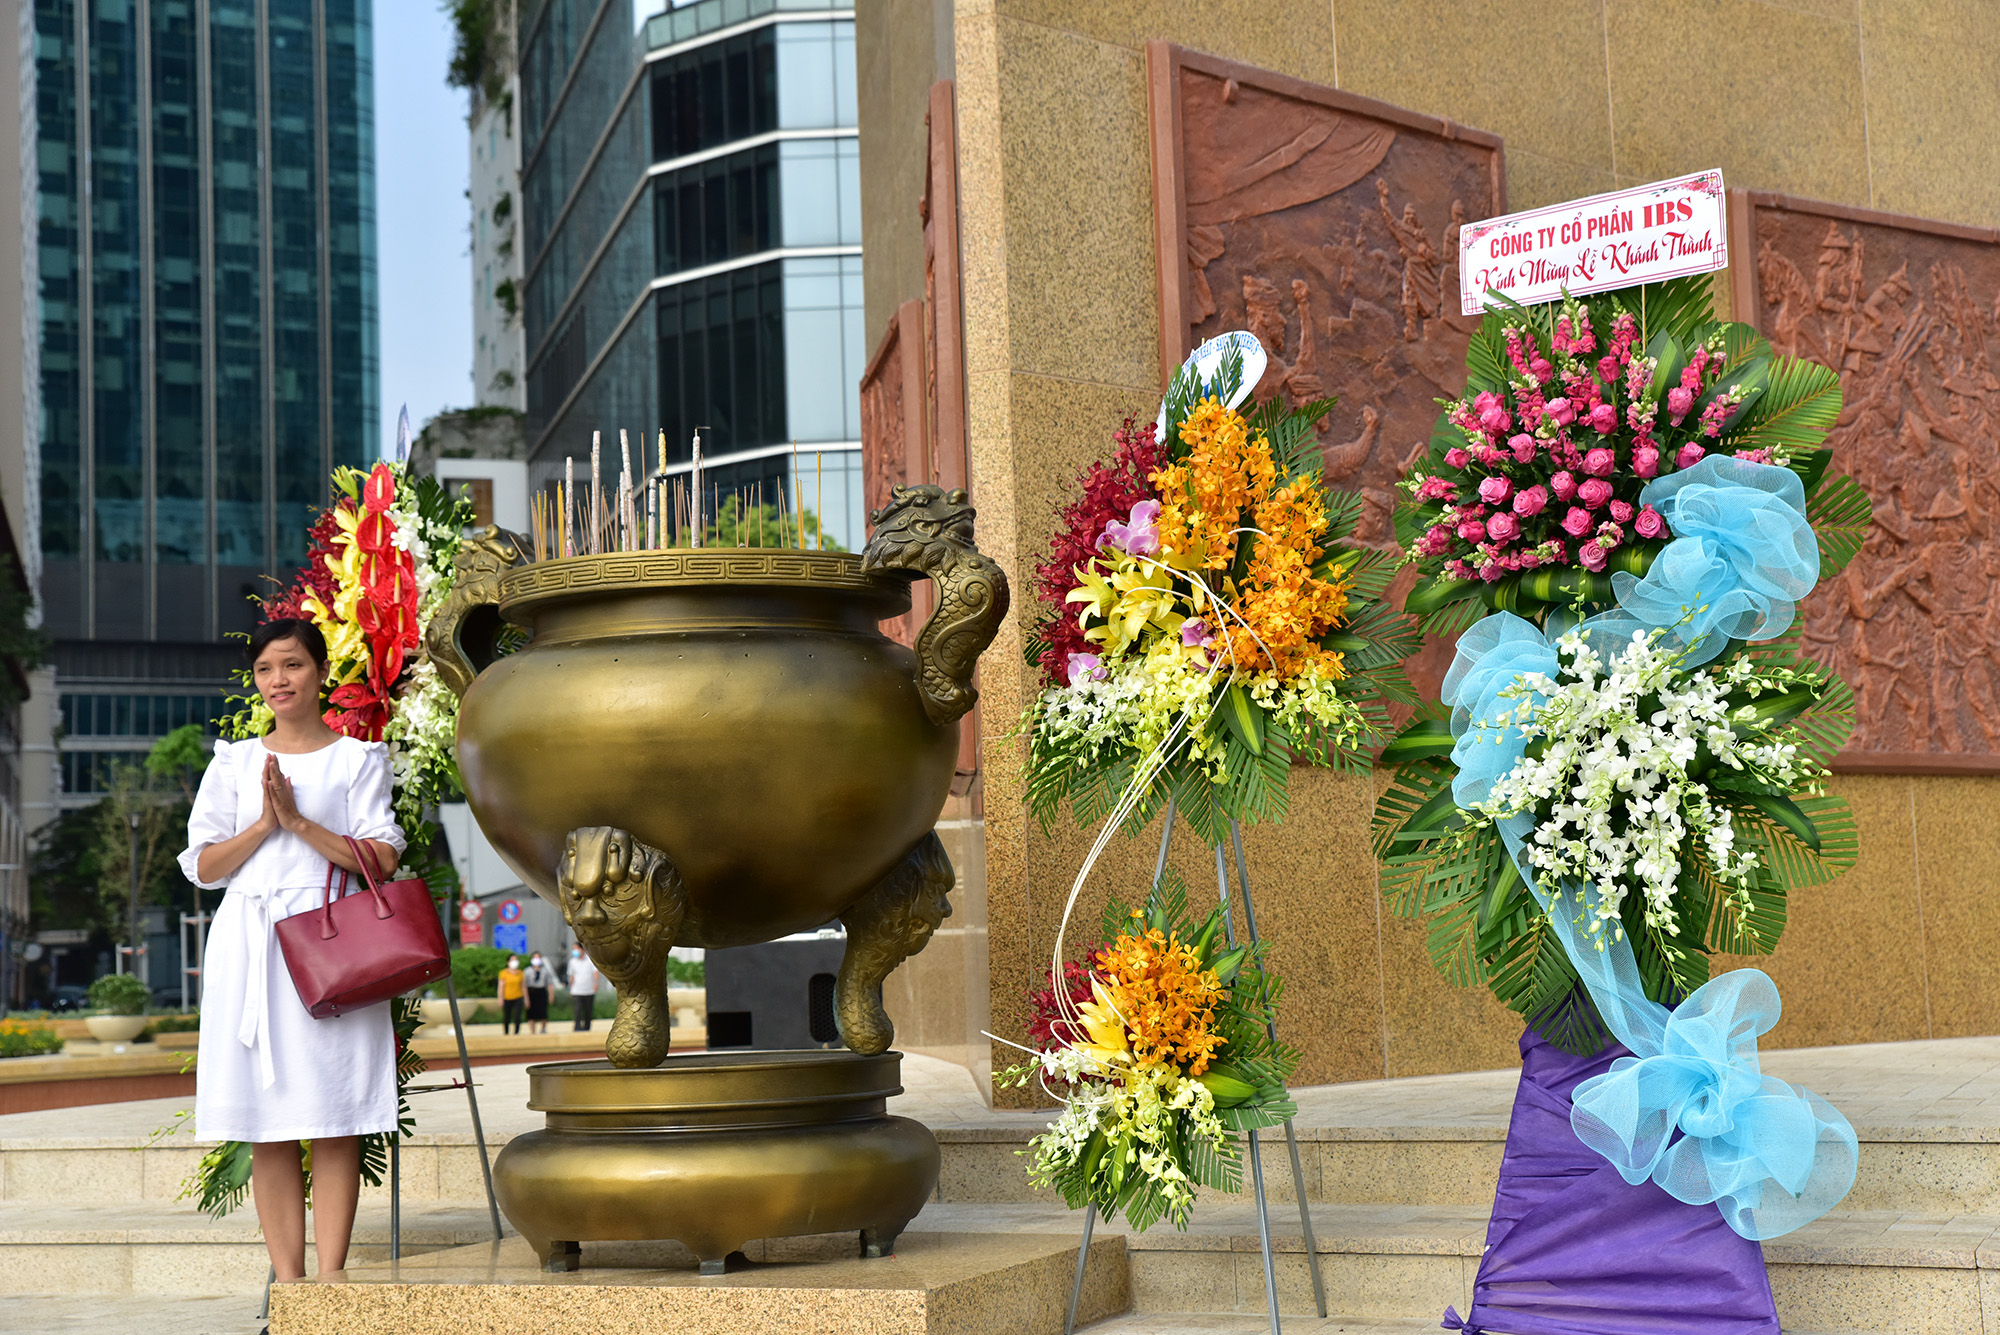 Reset the incense burner at Tran Hung Dao monument - 3